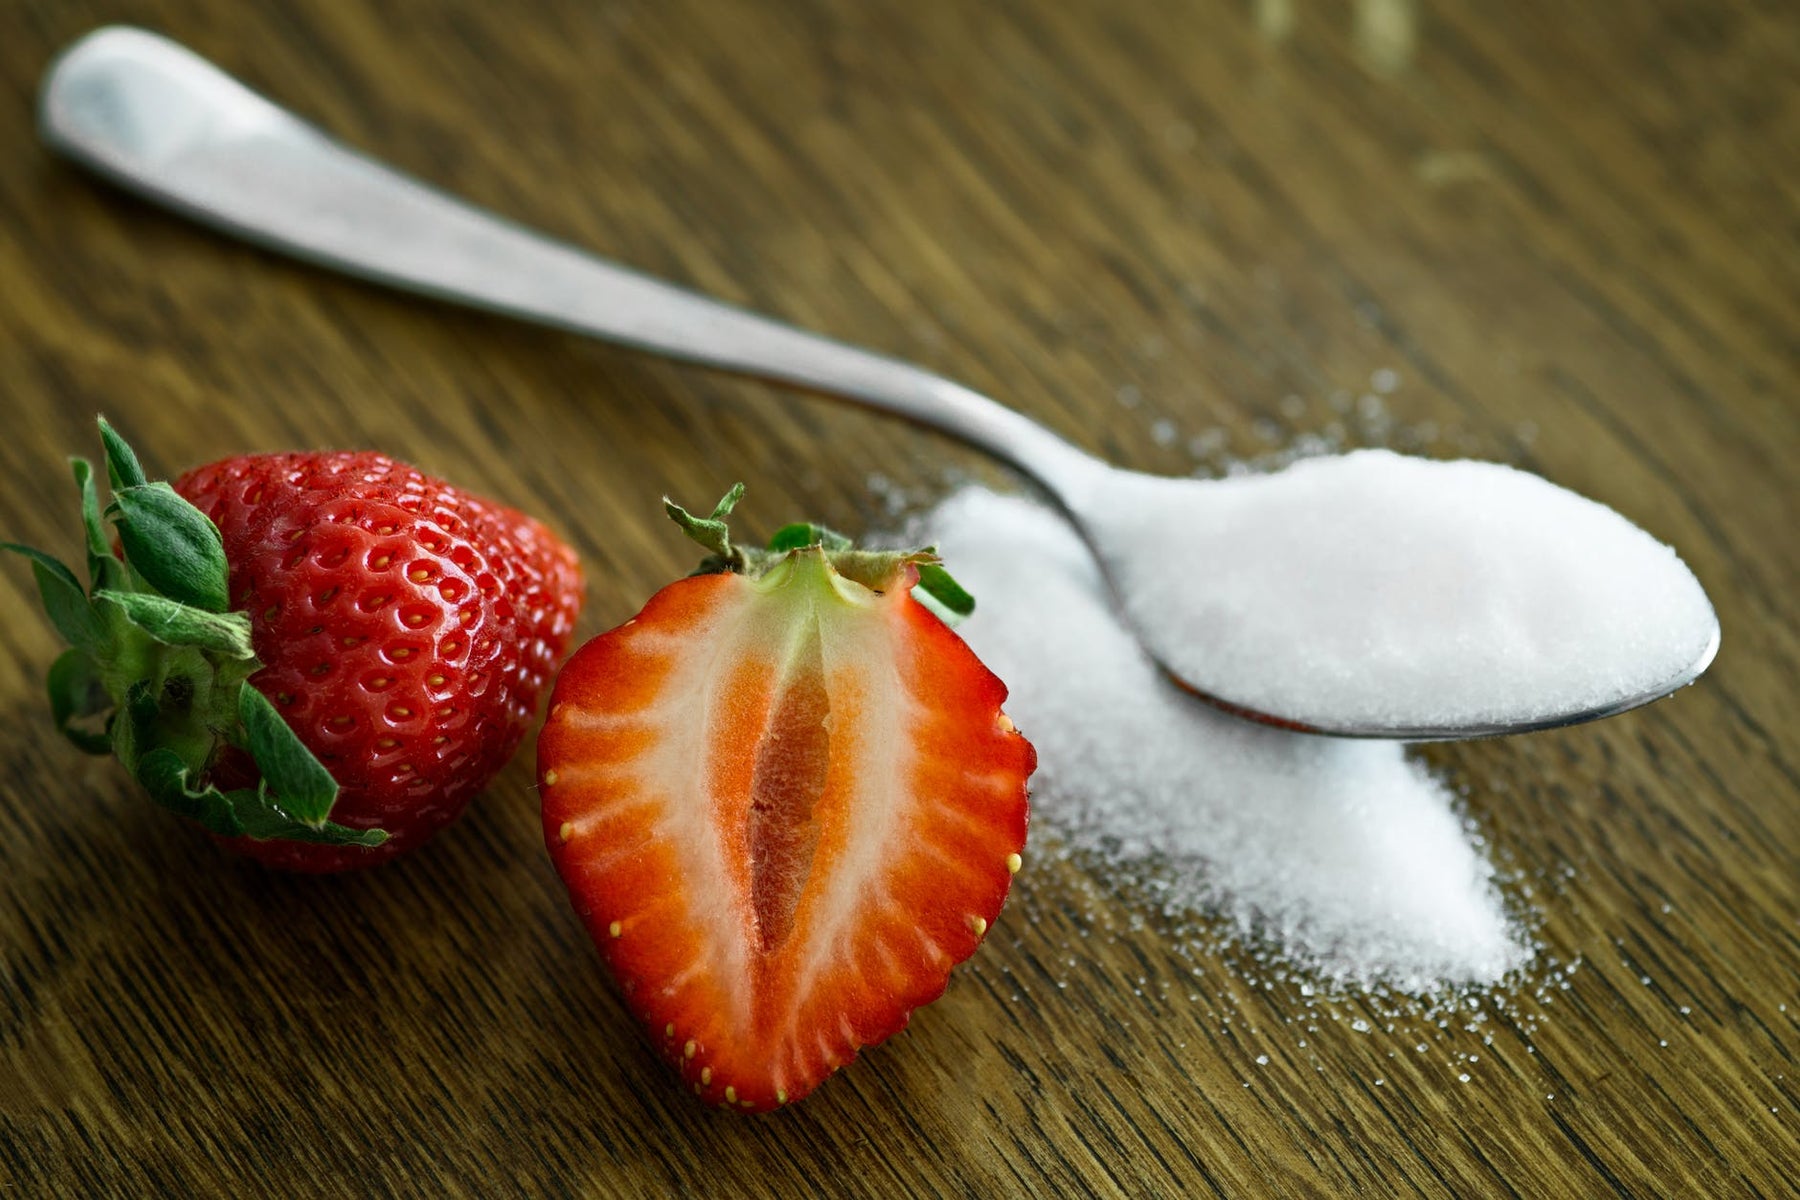 Mar 4: Are you a sugar addict?